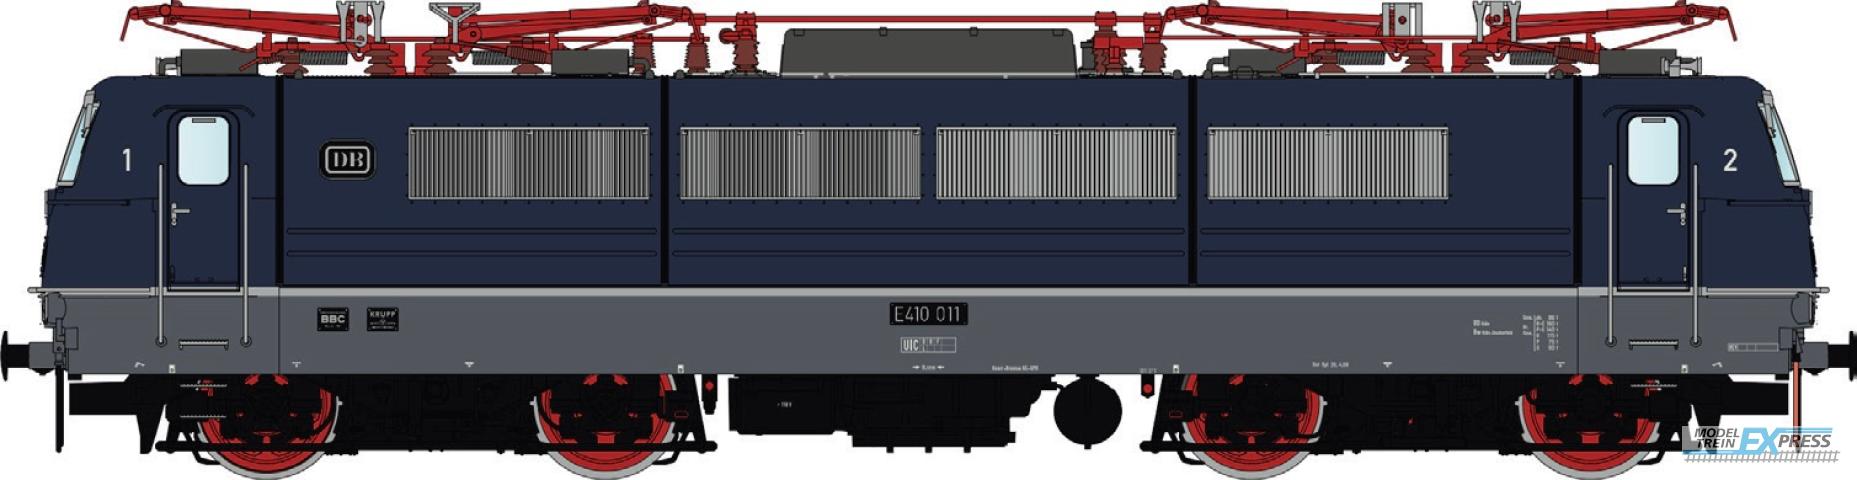 LS Models 16022S DB E 410 011 (BBC) viersysteem-eloc Ep. IIIc (1967), staalblauw/leisteengrijs, 4 stroomafnemers, depot Köln-Deutzerfeld / Ep. IIIc / DB / HO / DC SOUND / 1 P.